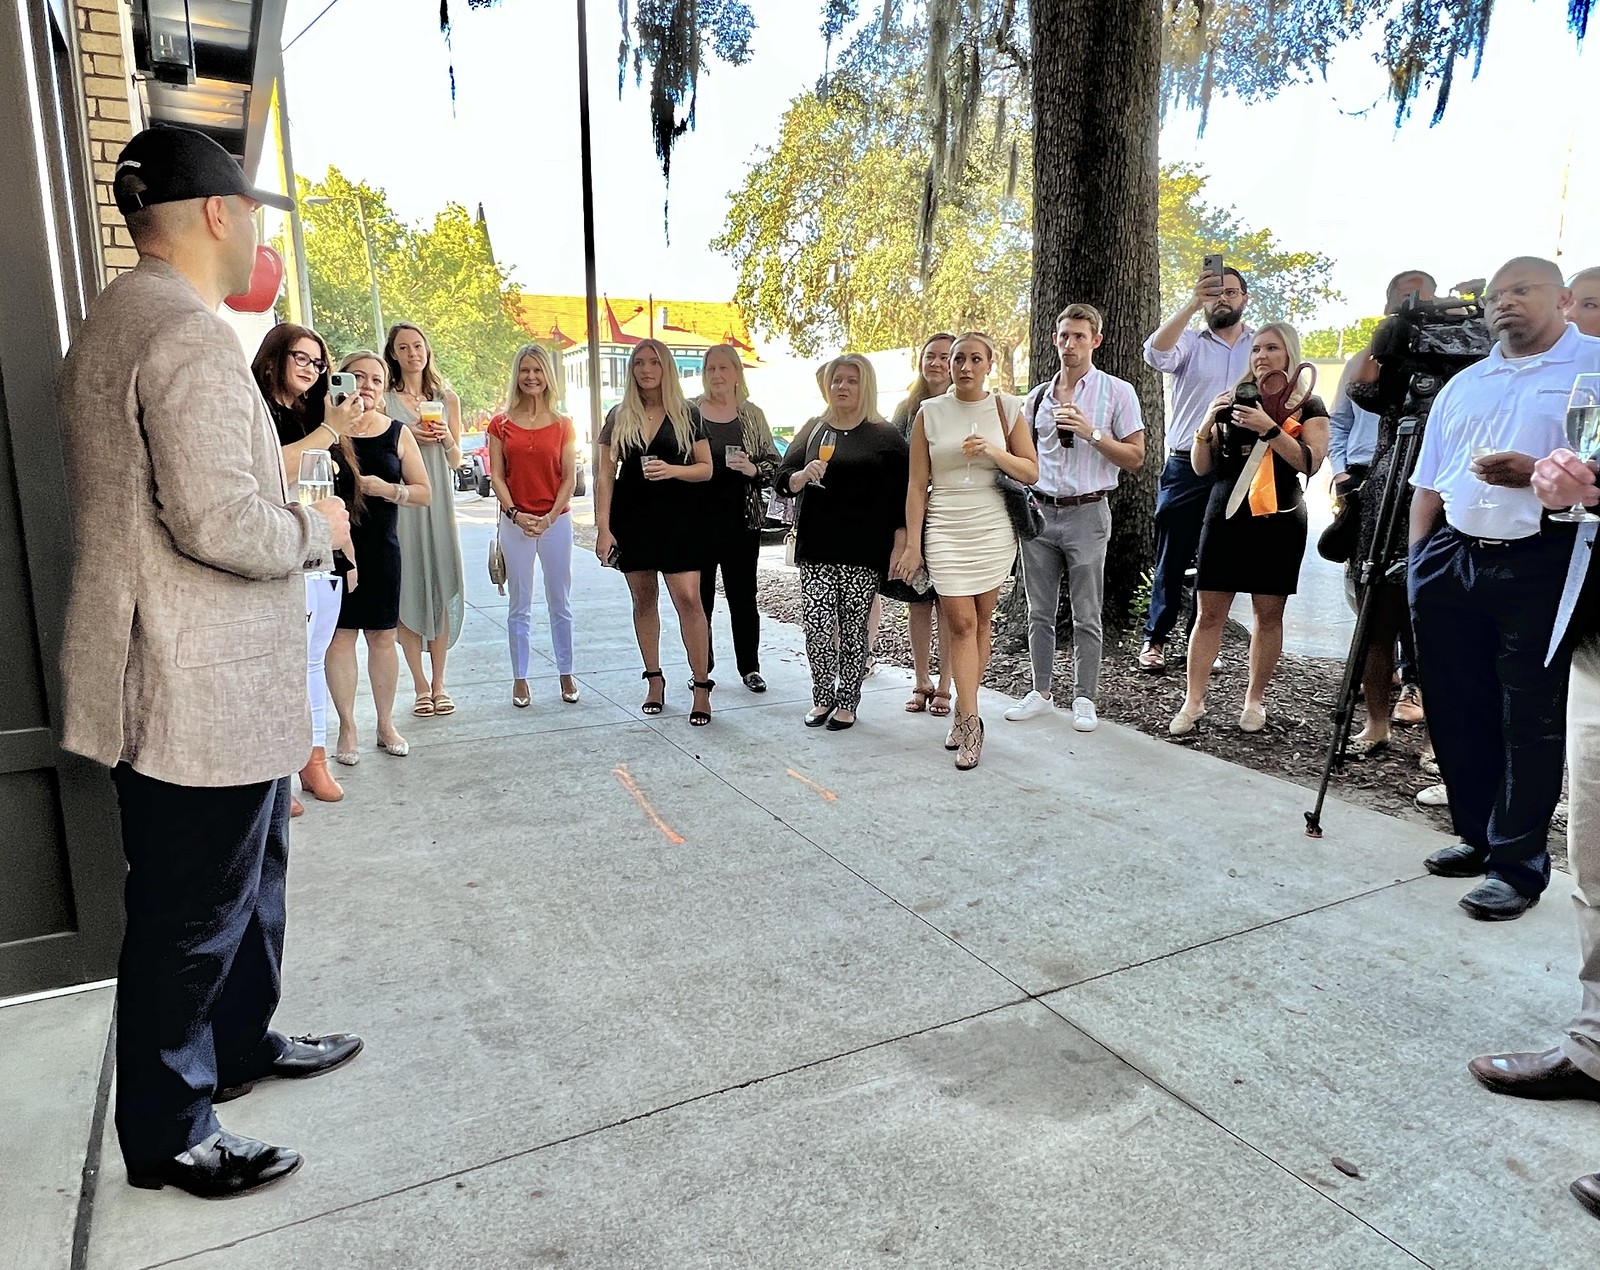 VEL Opens First Utopian Work Cafe in Savannah